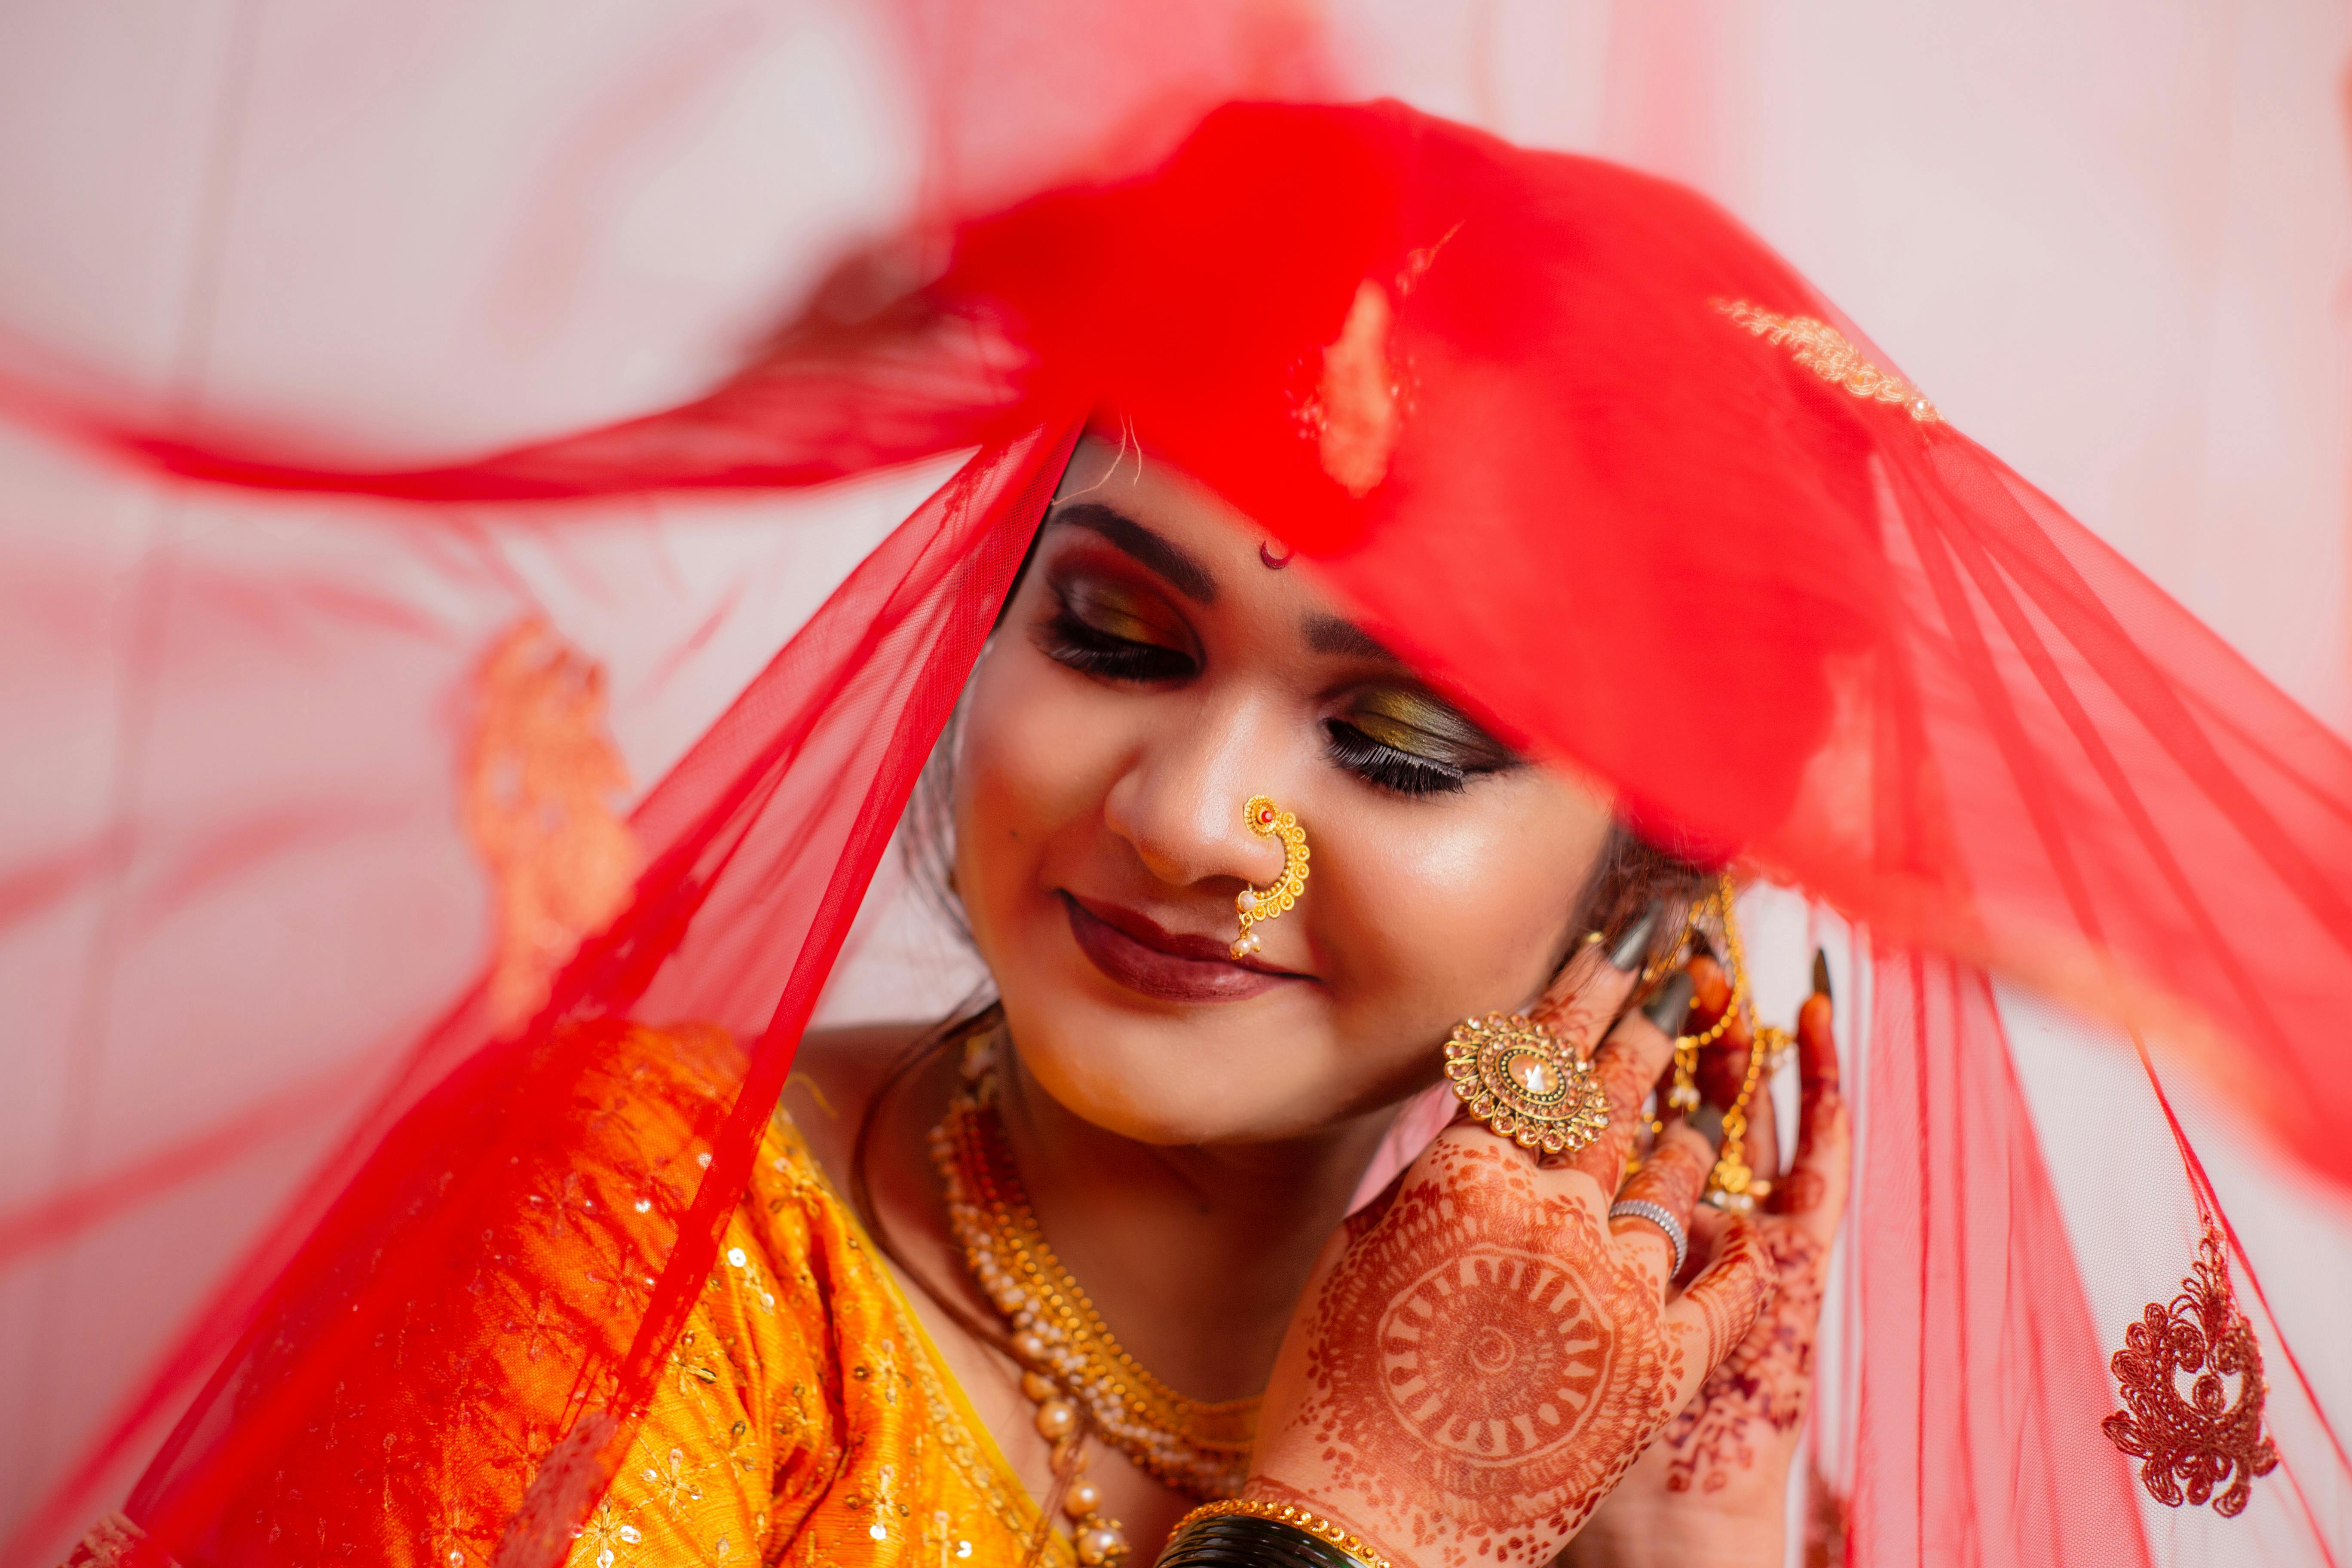 Beautiful Traditional Indian Wedding Dresses · Free Stock Photo